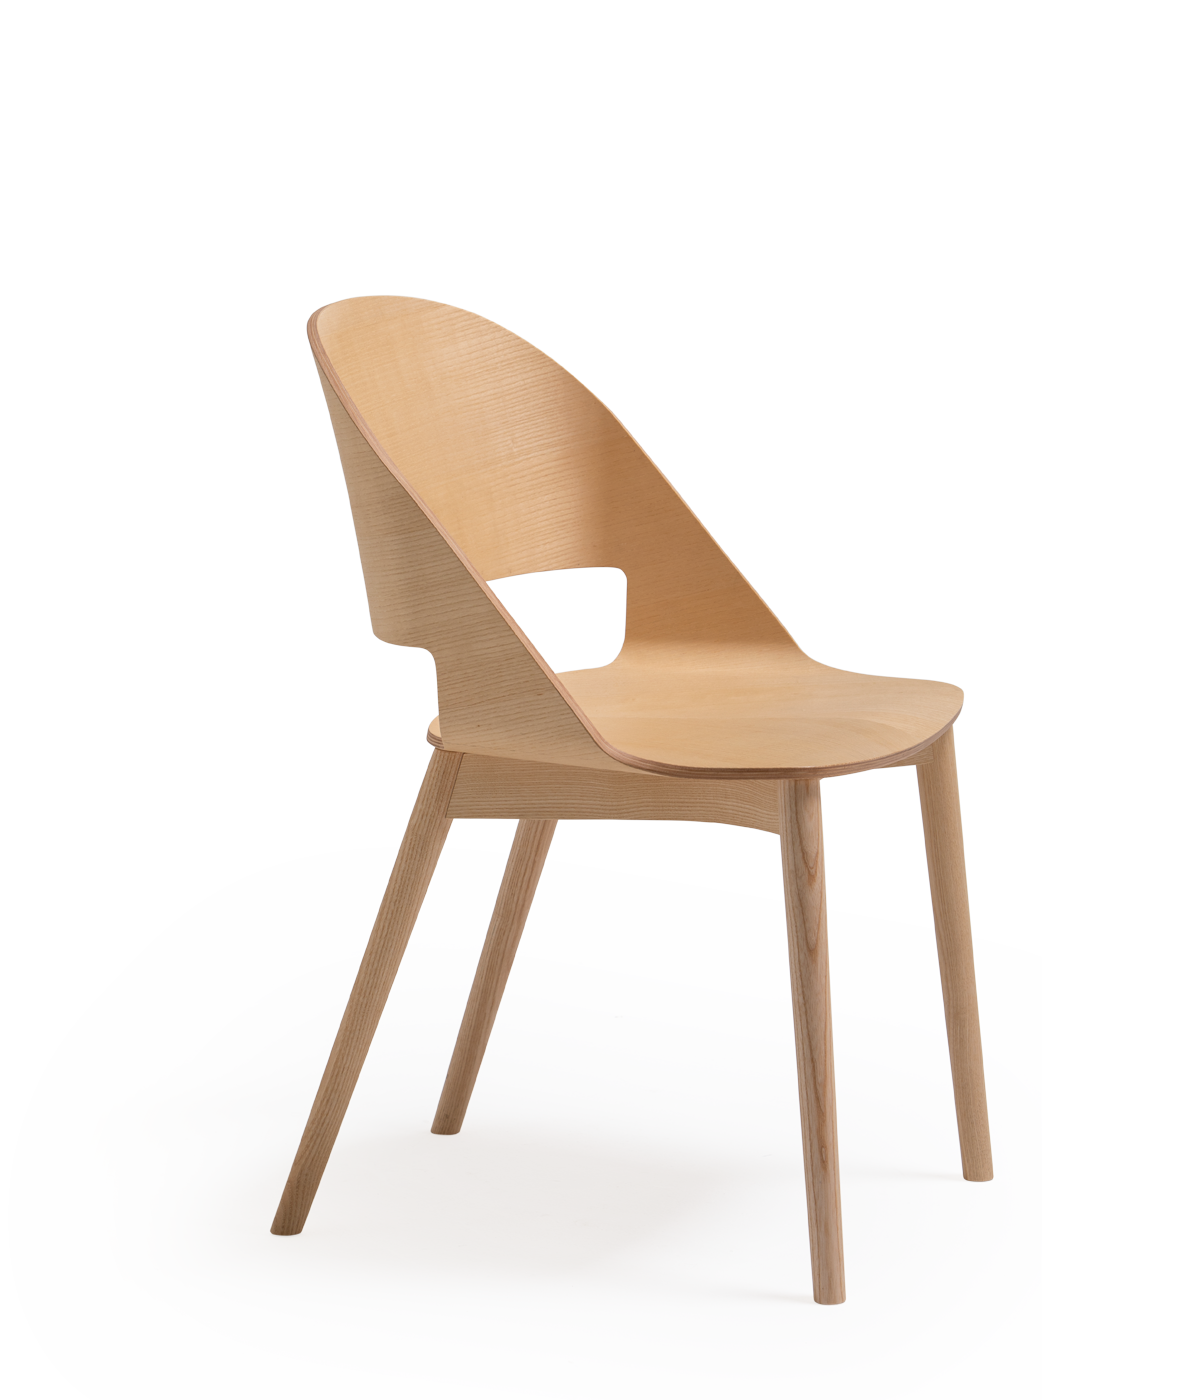 Goose chair Model C with wooden legs - Vergés